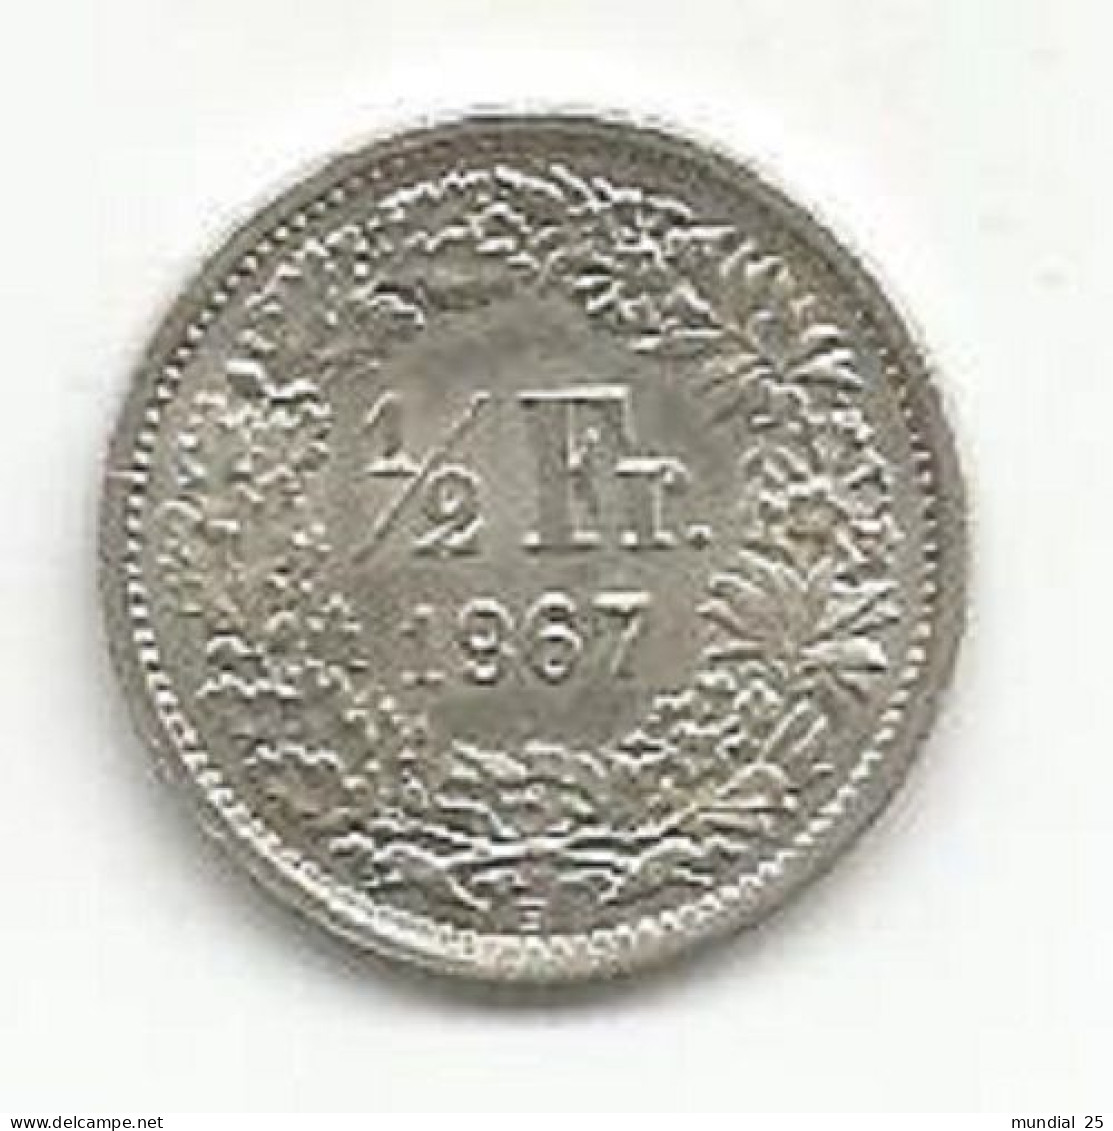 SWITZERLAND 1/2 FRANC 1967 B SILVER - 1/2 Franken